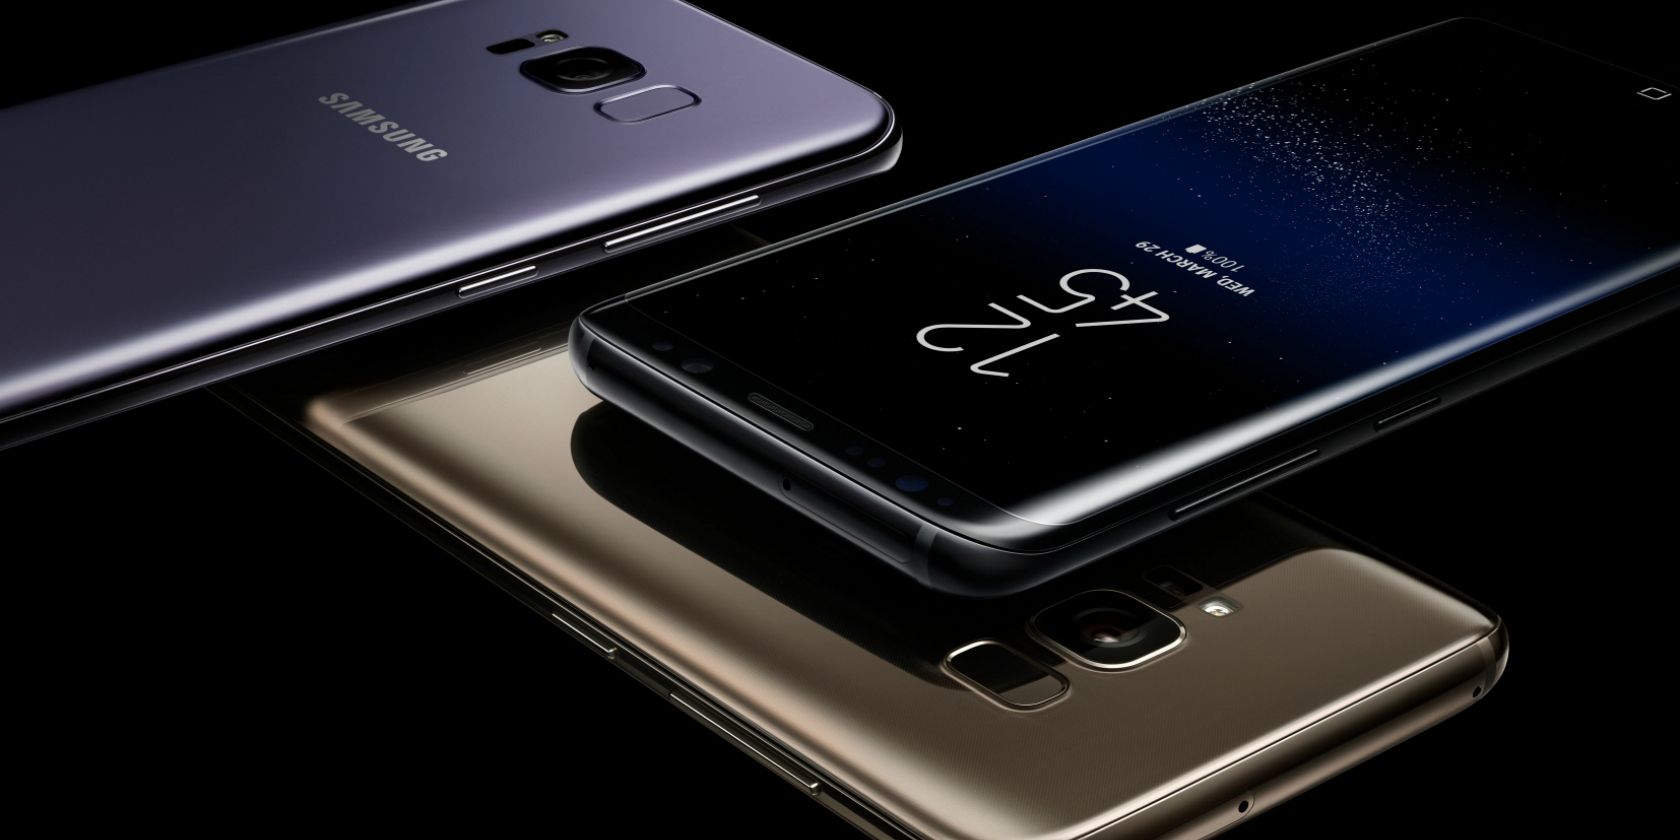 Samsung Galaxy S8 series